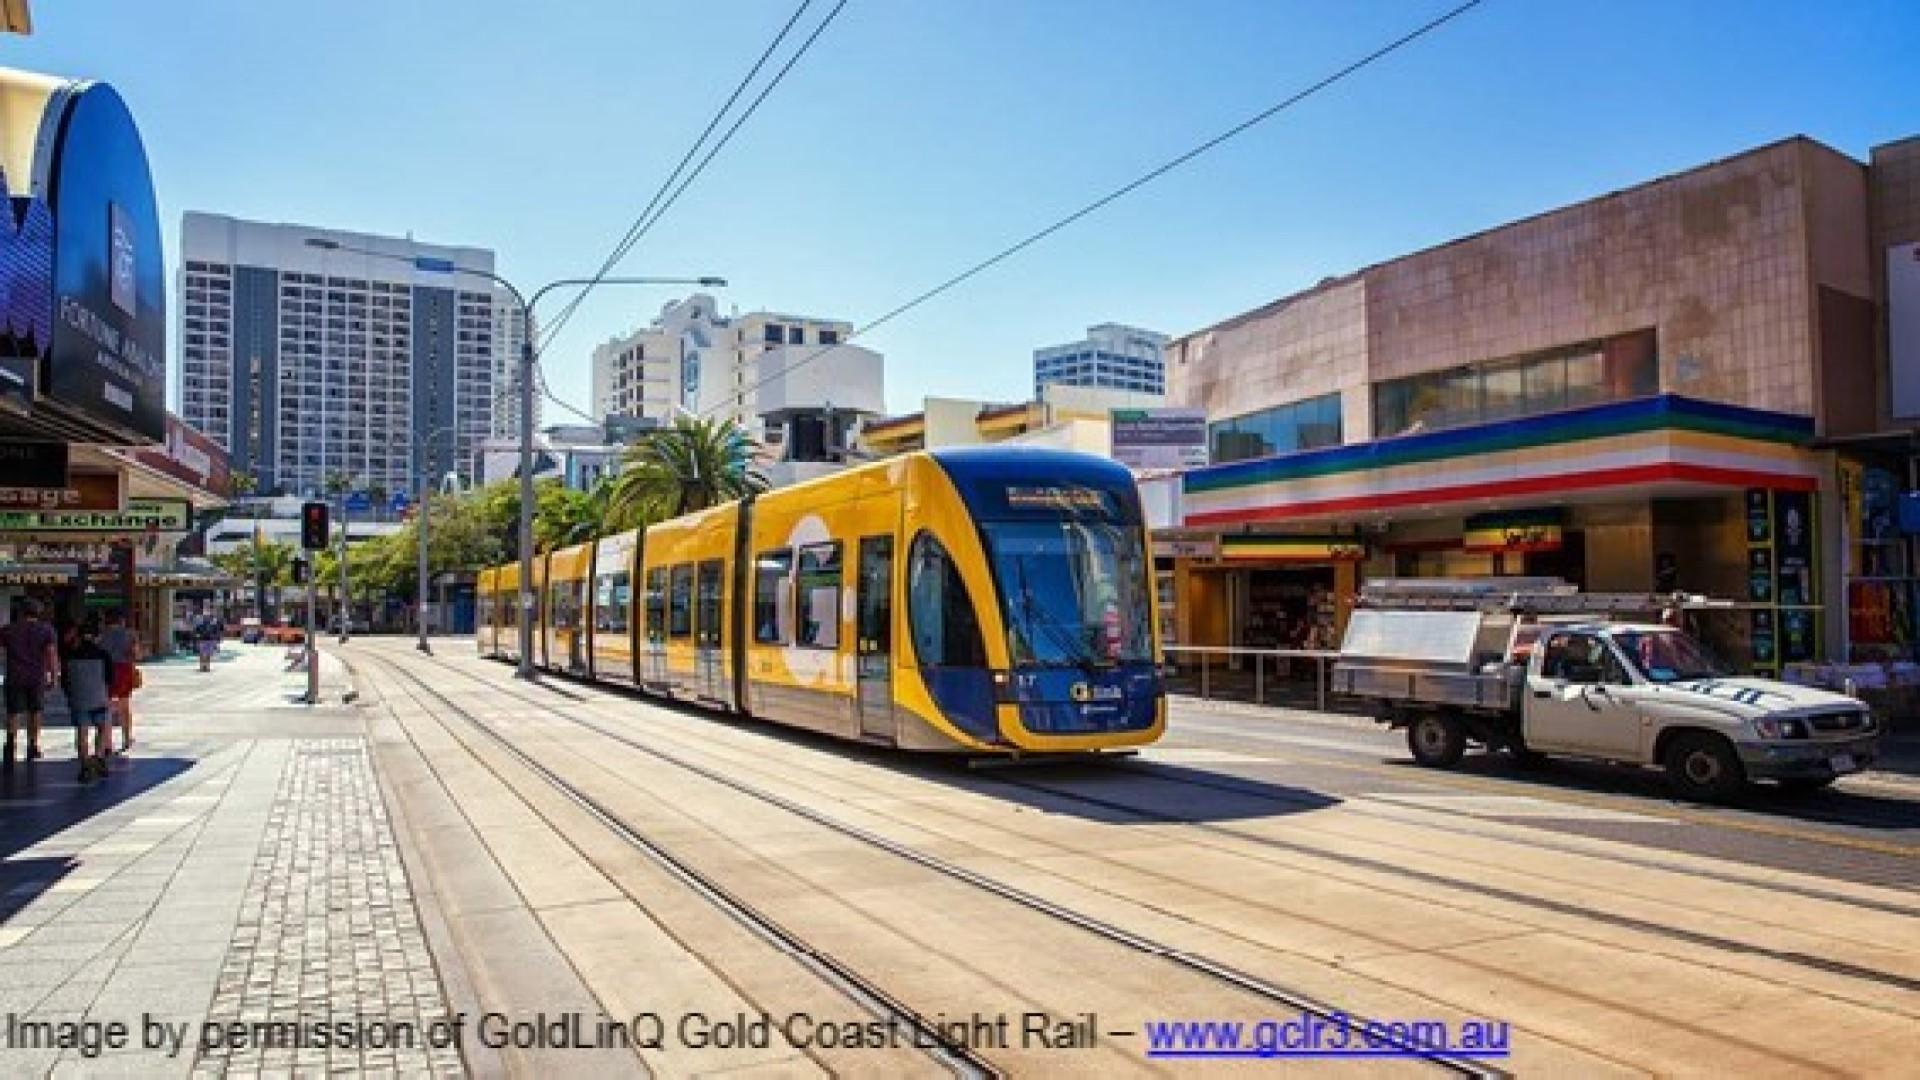 GoldLinQ Gold Coast Light Rail Image